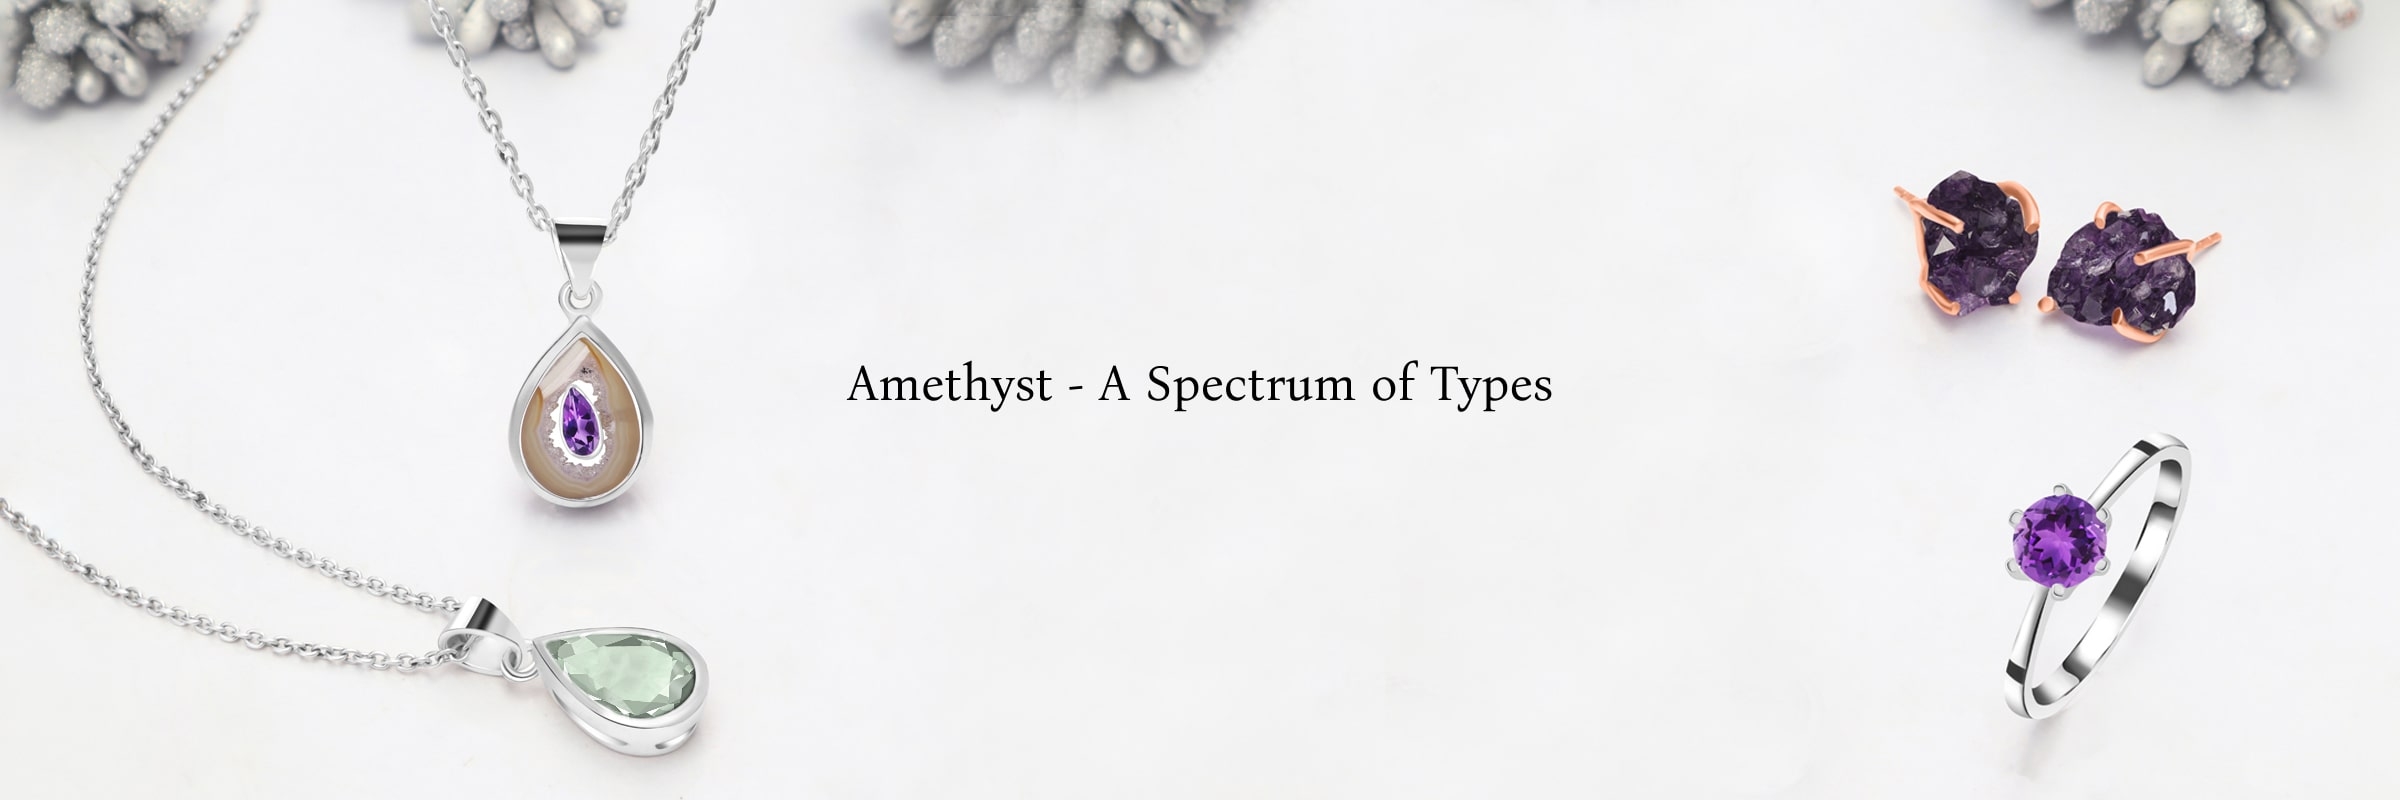 Types Of Amethyst Gemstone